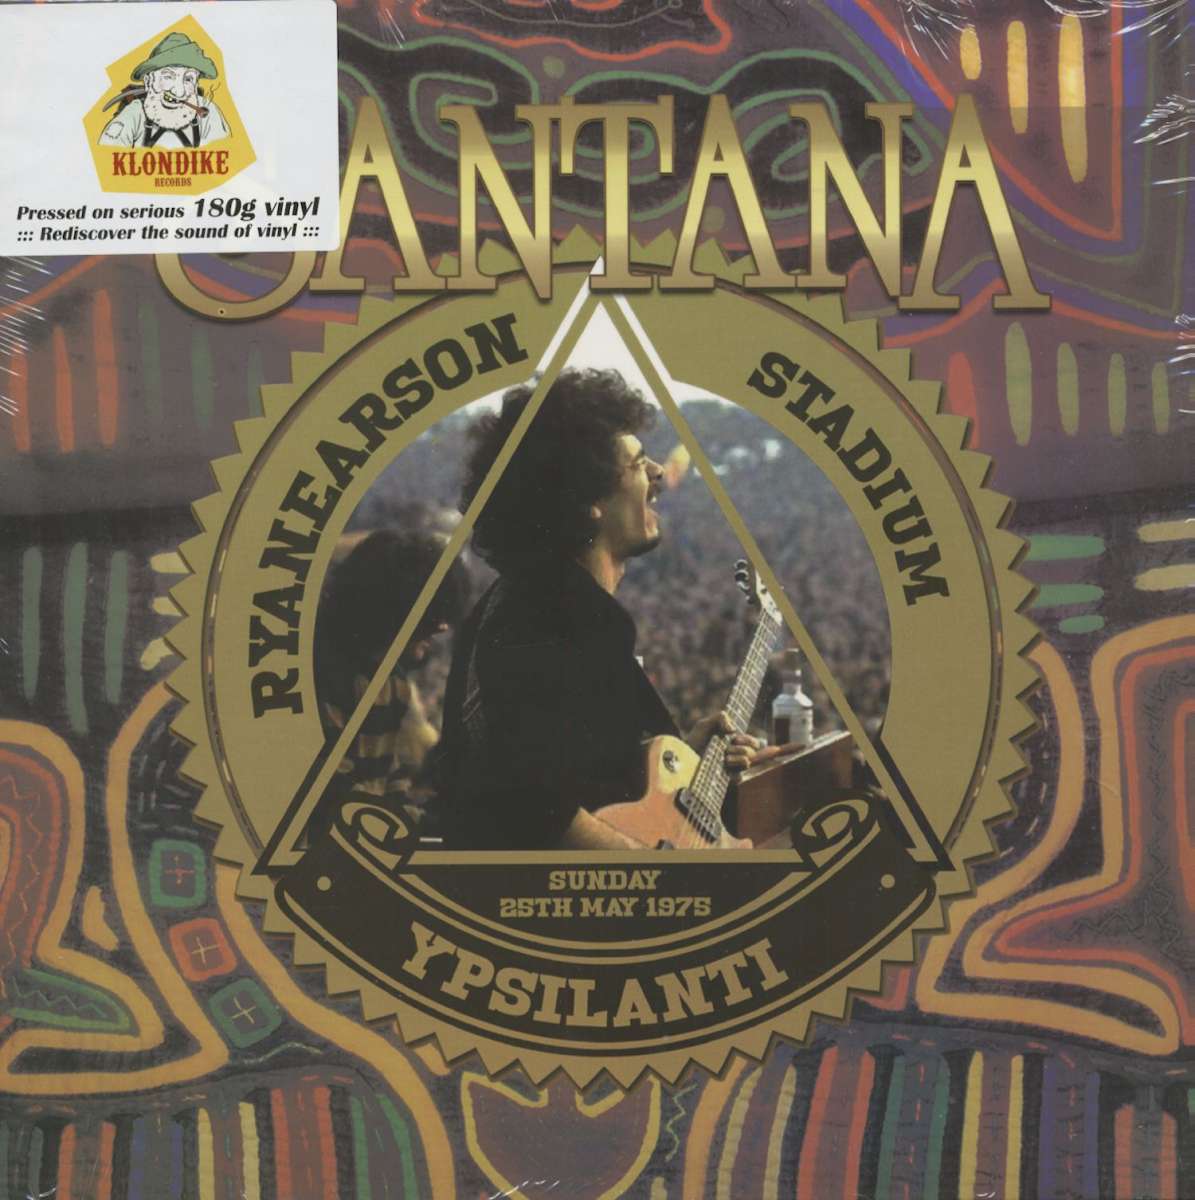 Album of The Week - 006 Abraxas (1970) by Santana - MY 